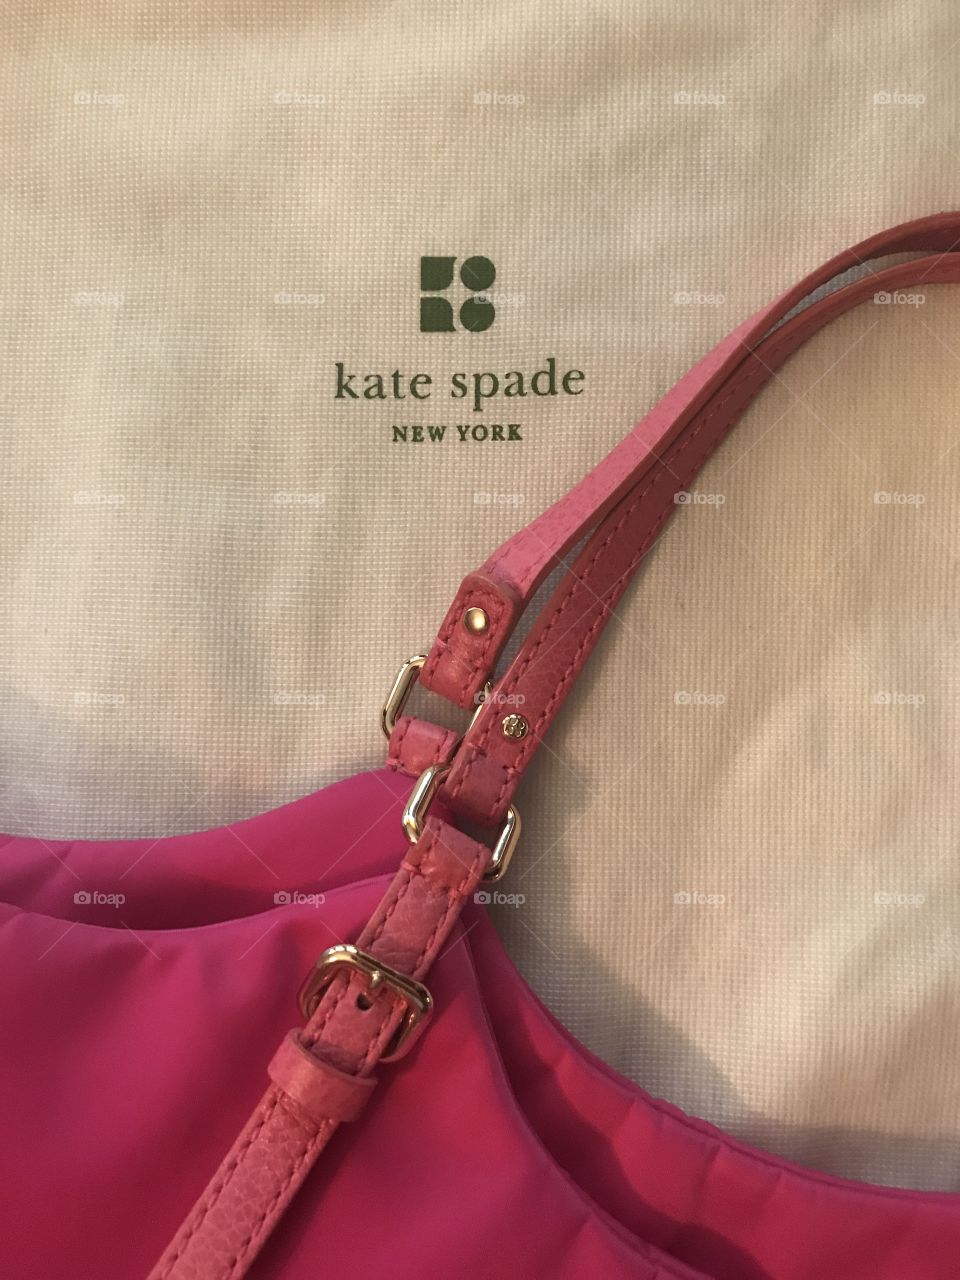 Kate Spade Handbag Branding